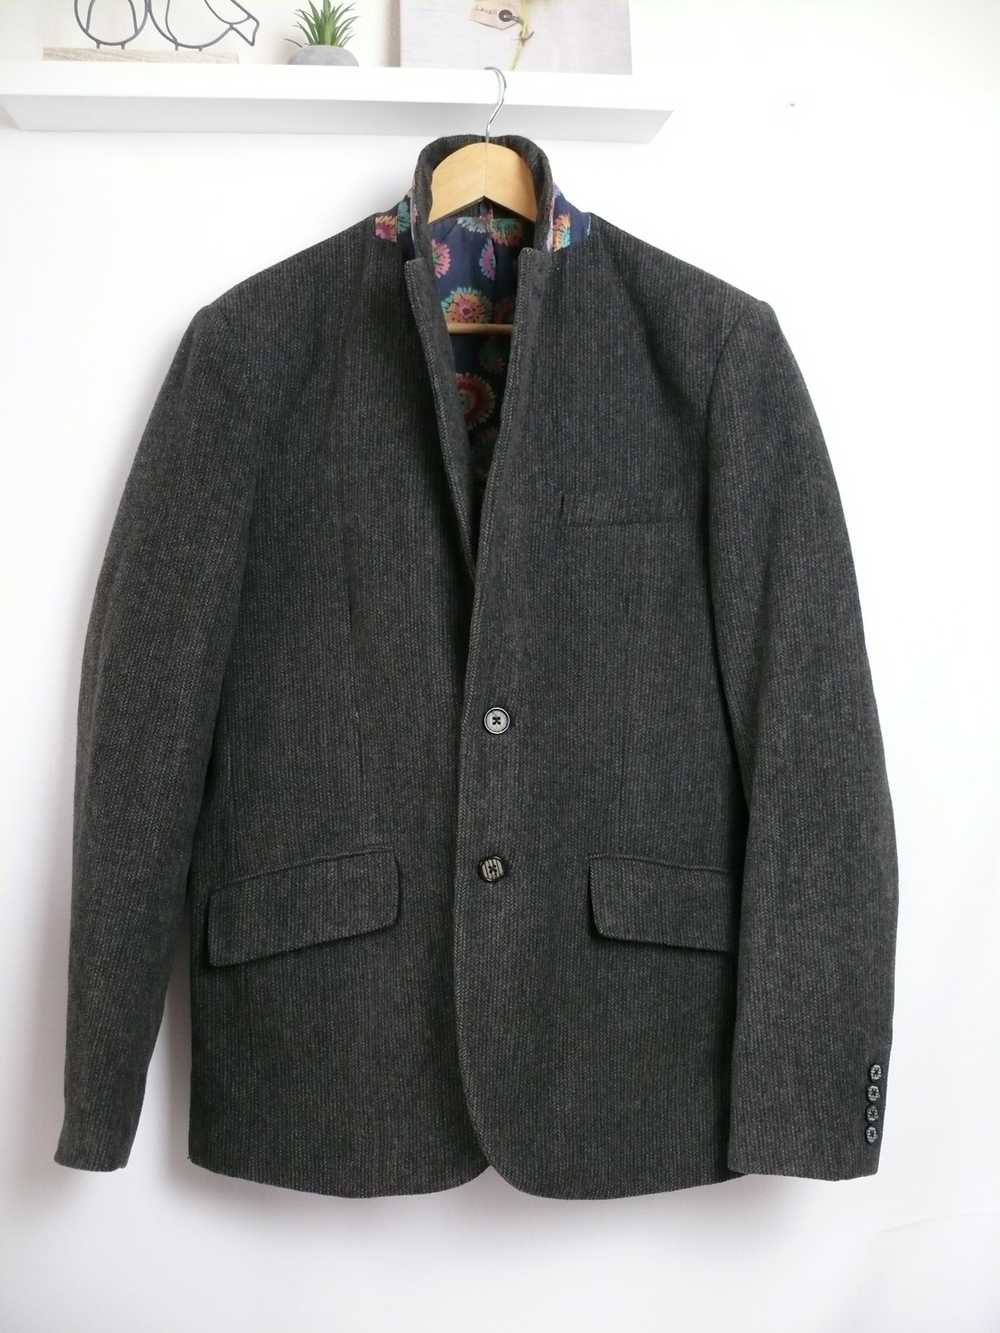 Desigual Rare Desigual Wool Blend Jacket Blazer - image 3